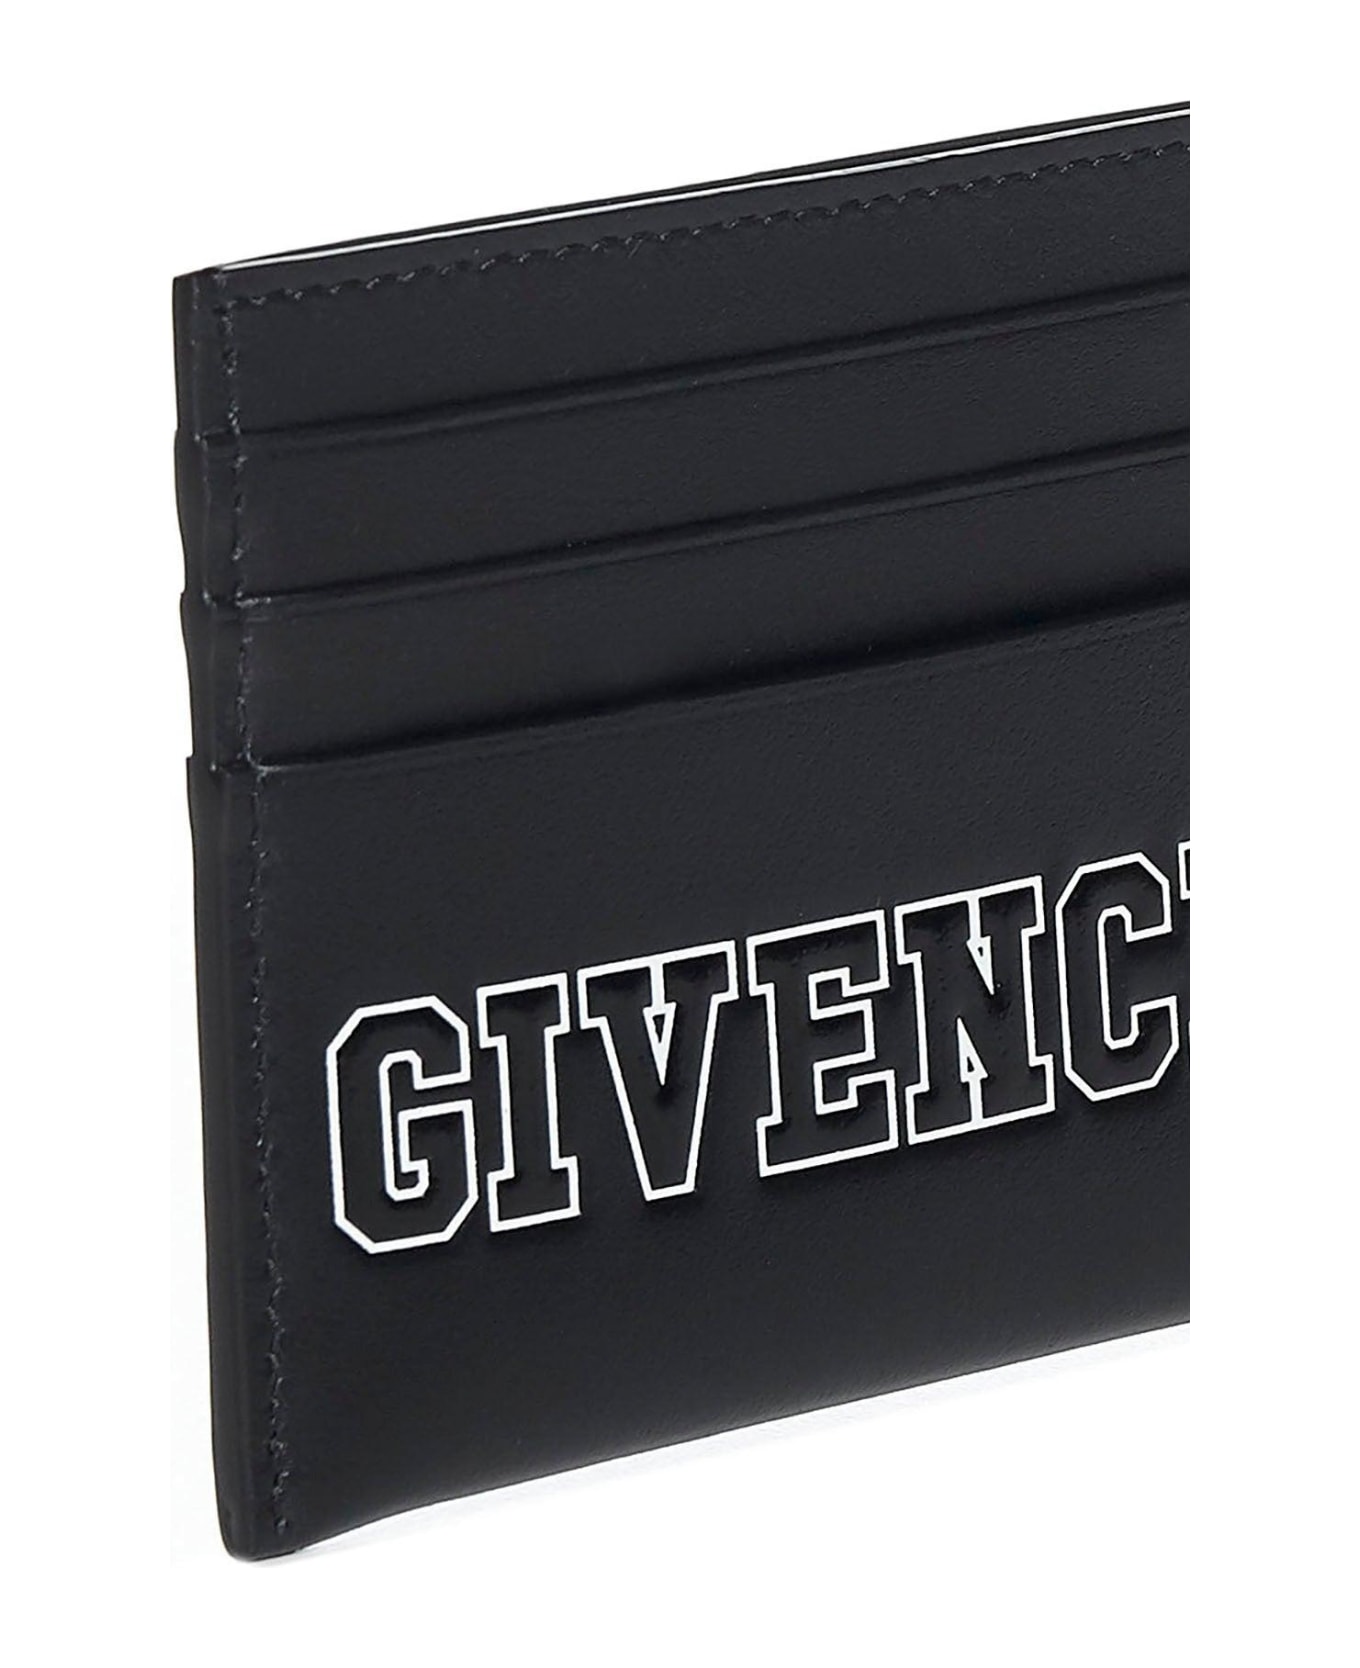 Givenchy Logo Printed Cardholder - Black 財布